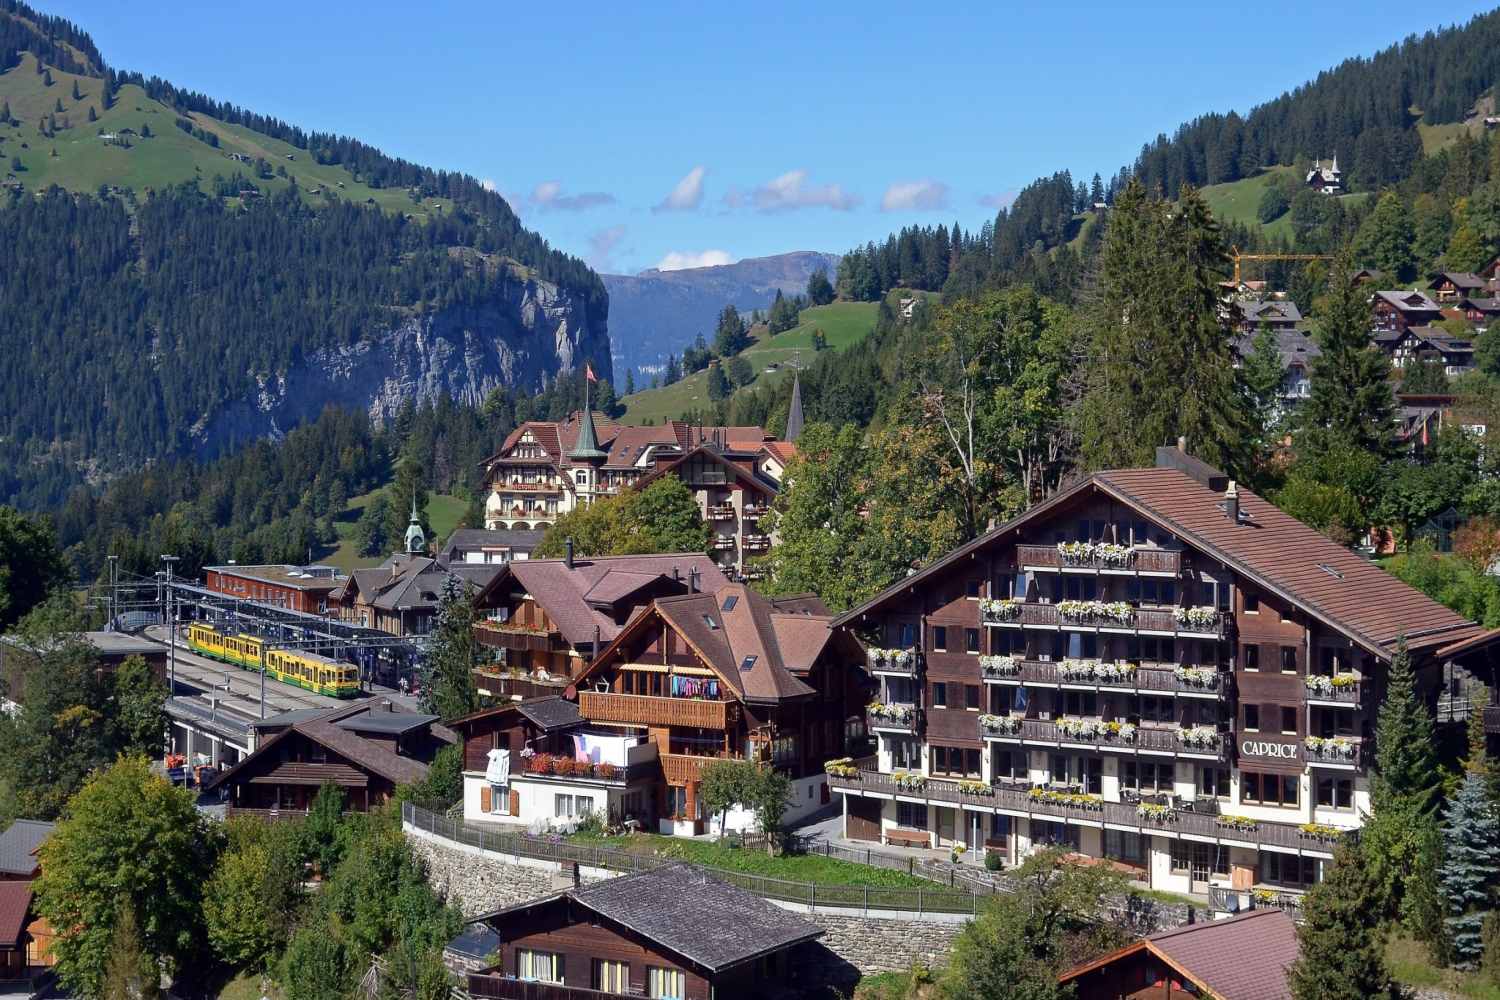 Hotel Maya Caprice Wengen, Berne - Switzerland